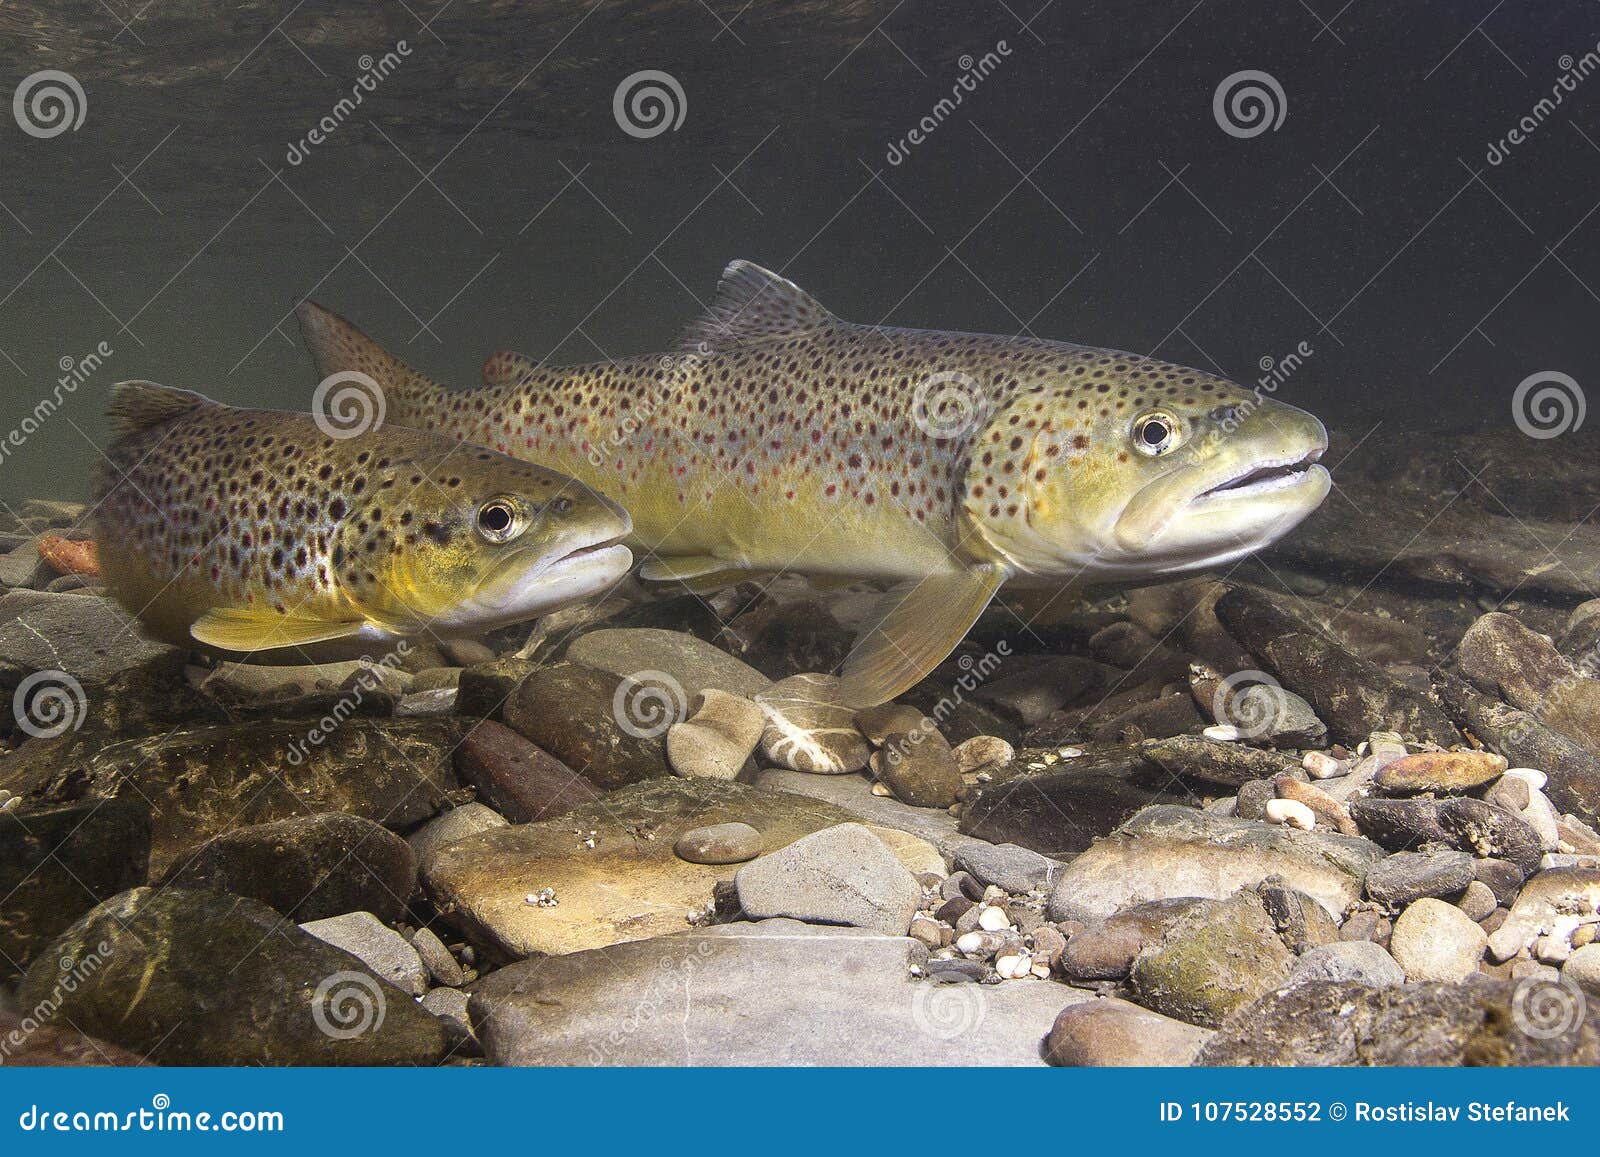 brown trout salmo trutta preparing for spawning